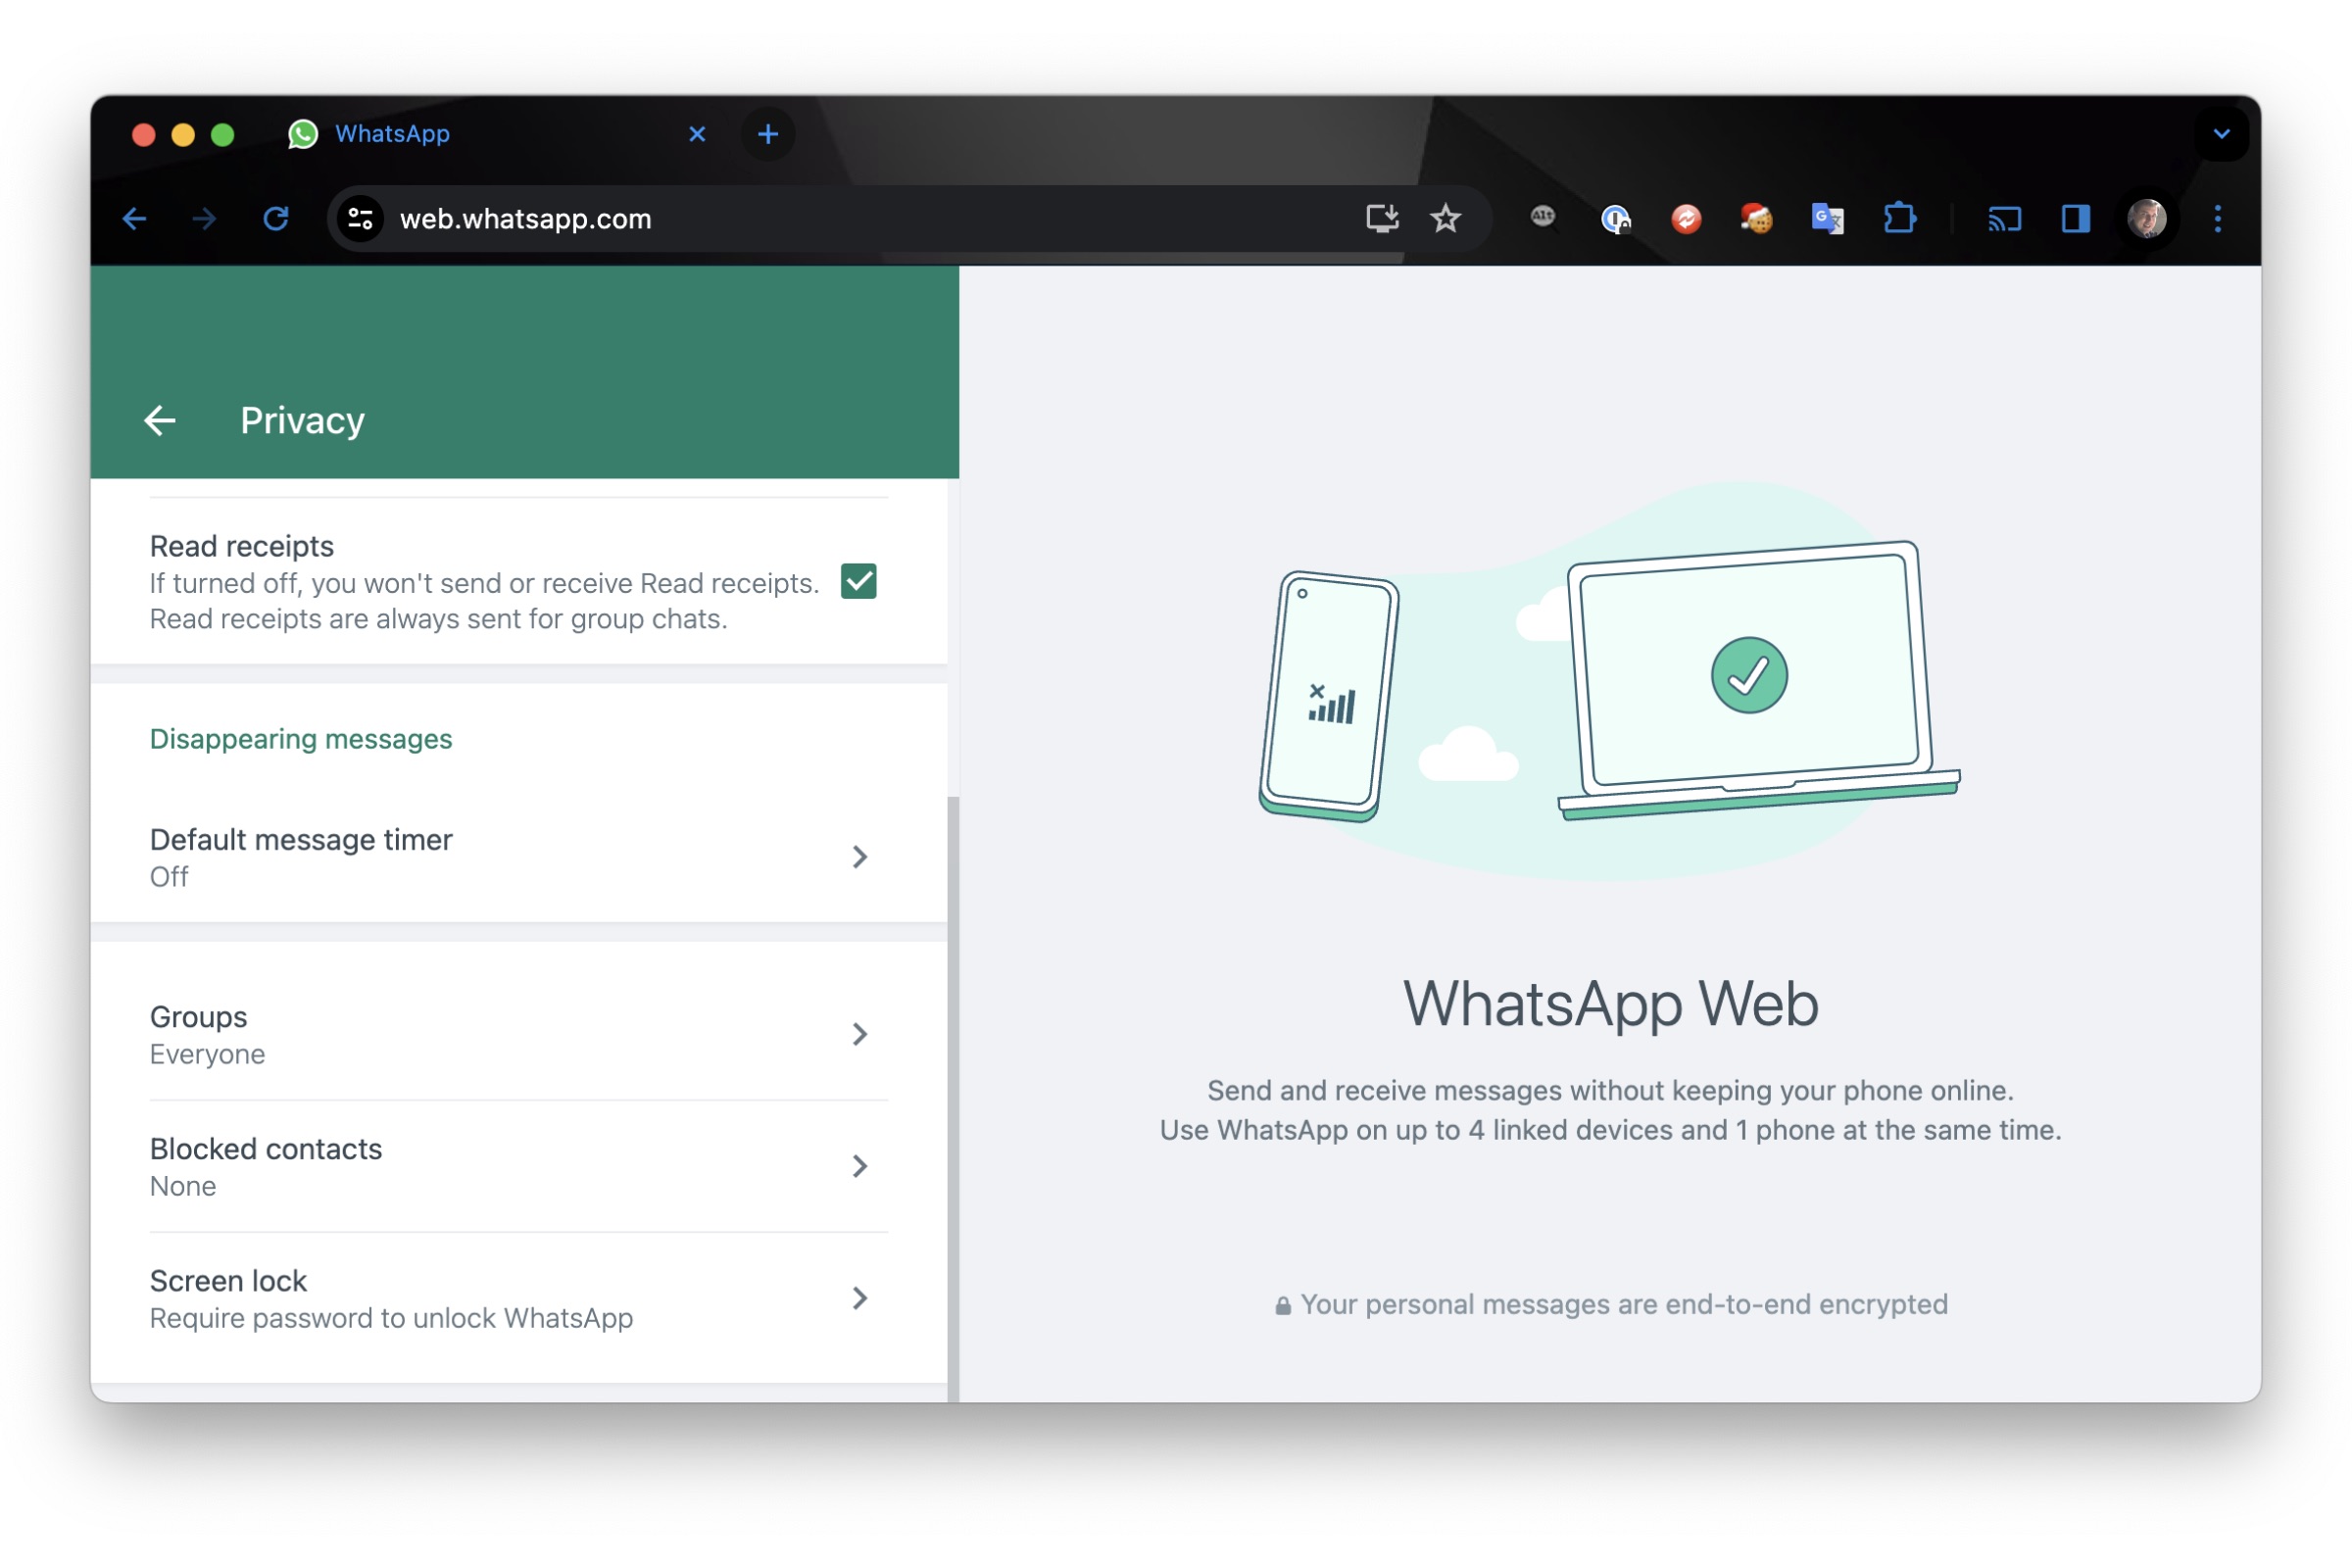 WhatsApp Web screen lock active in Chrome.